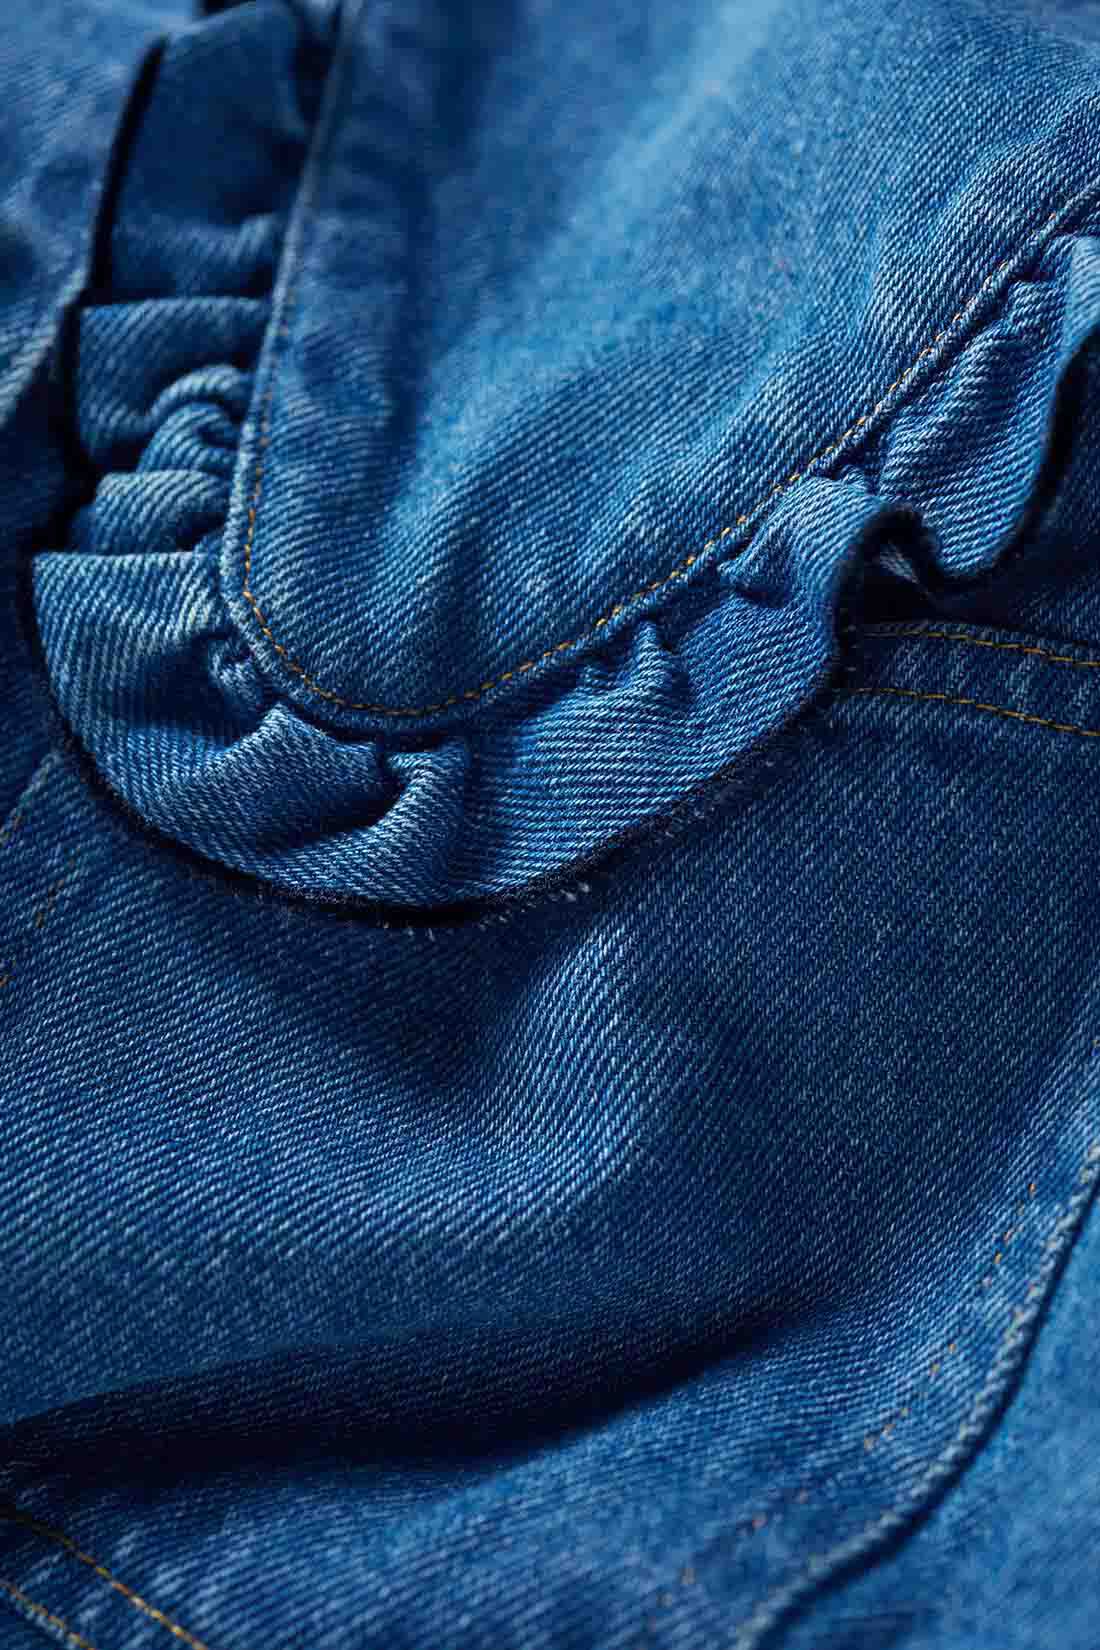 MEDE19F|MEDE19F　フリル衿デニムシャツジャケット〈ユーズドブルー〉|ユーズド加工による古着風の表情や、ごわつきのない着用感もポイント。ボタンは本格的な打ち込みタイプです。